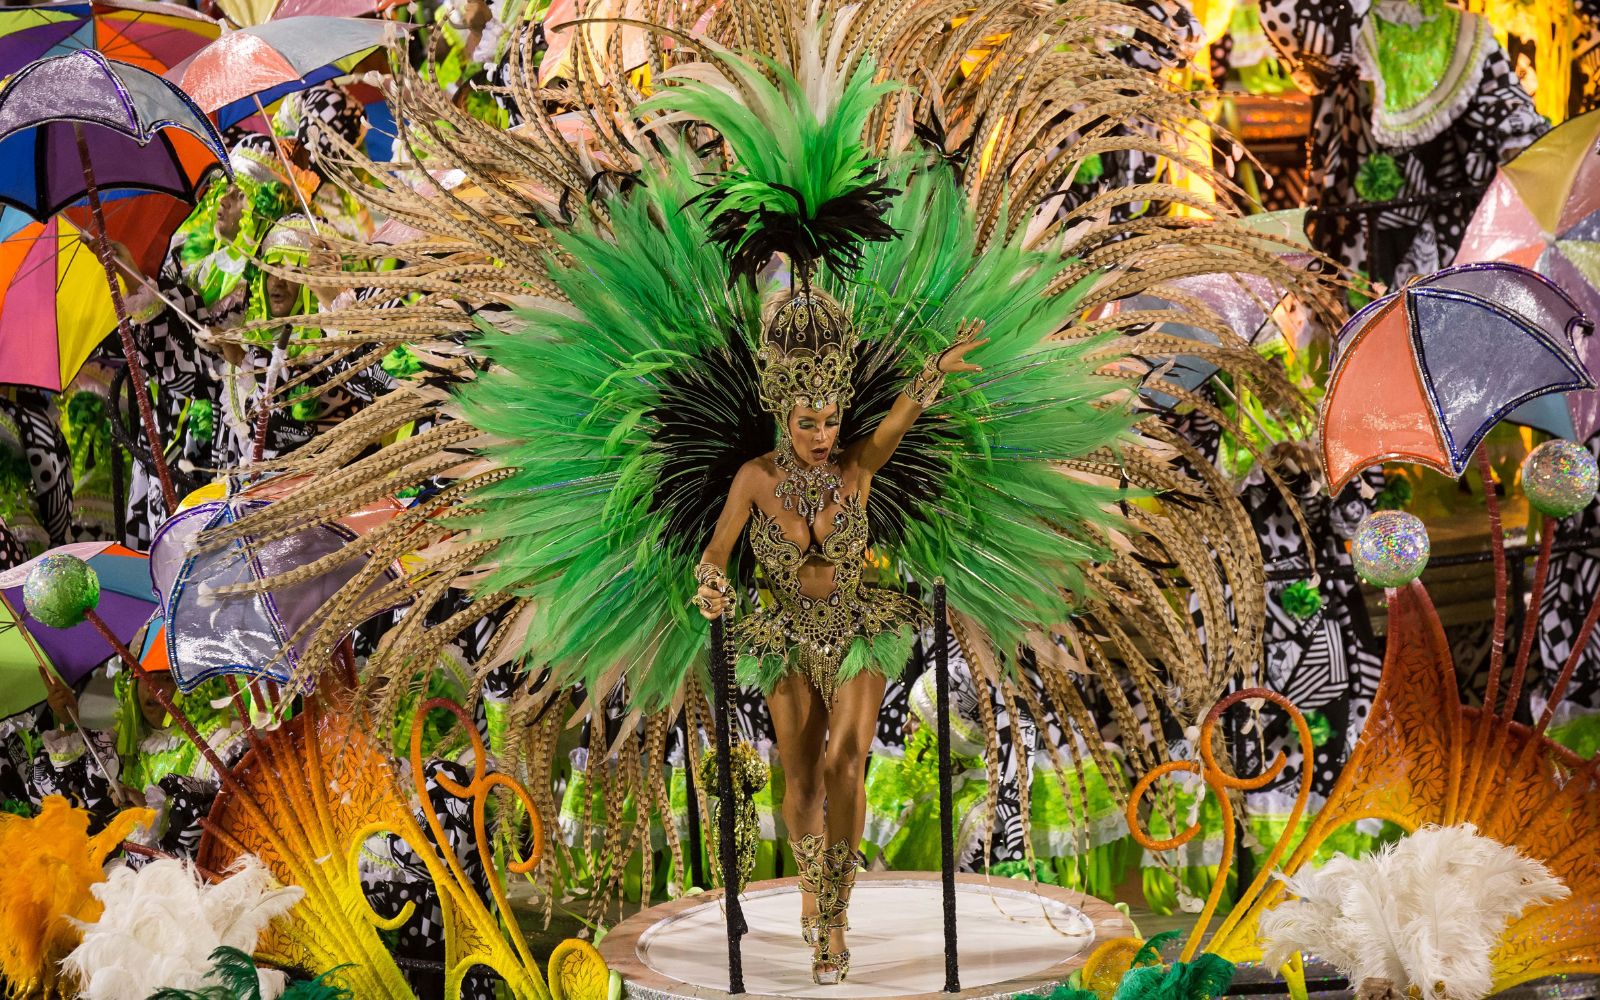 Best World's Carnivals For Upcoming Season